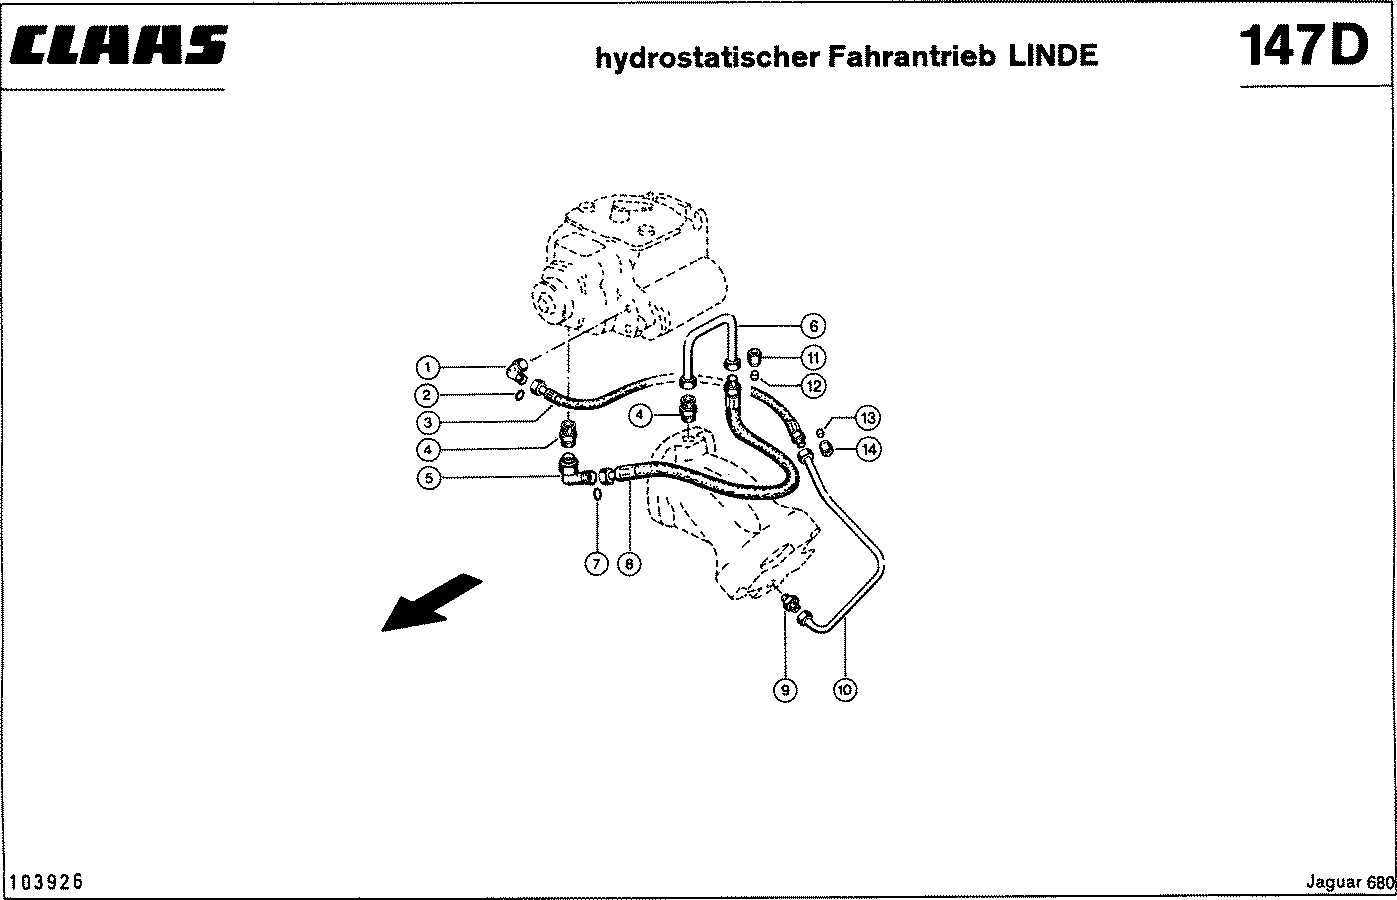 JAGUAR - HYDROSTATISCHER FAHRANTRIEB -LINDE-, VAR. 3937